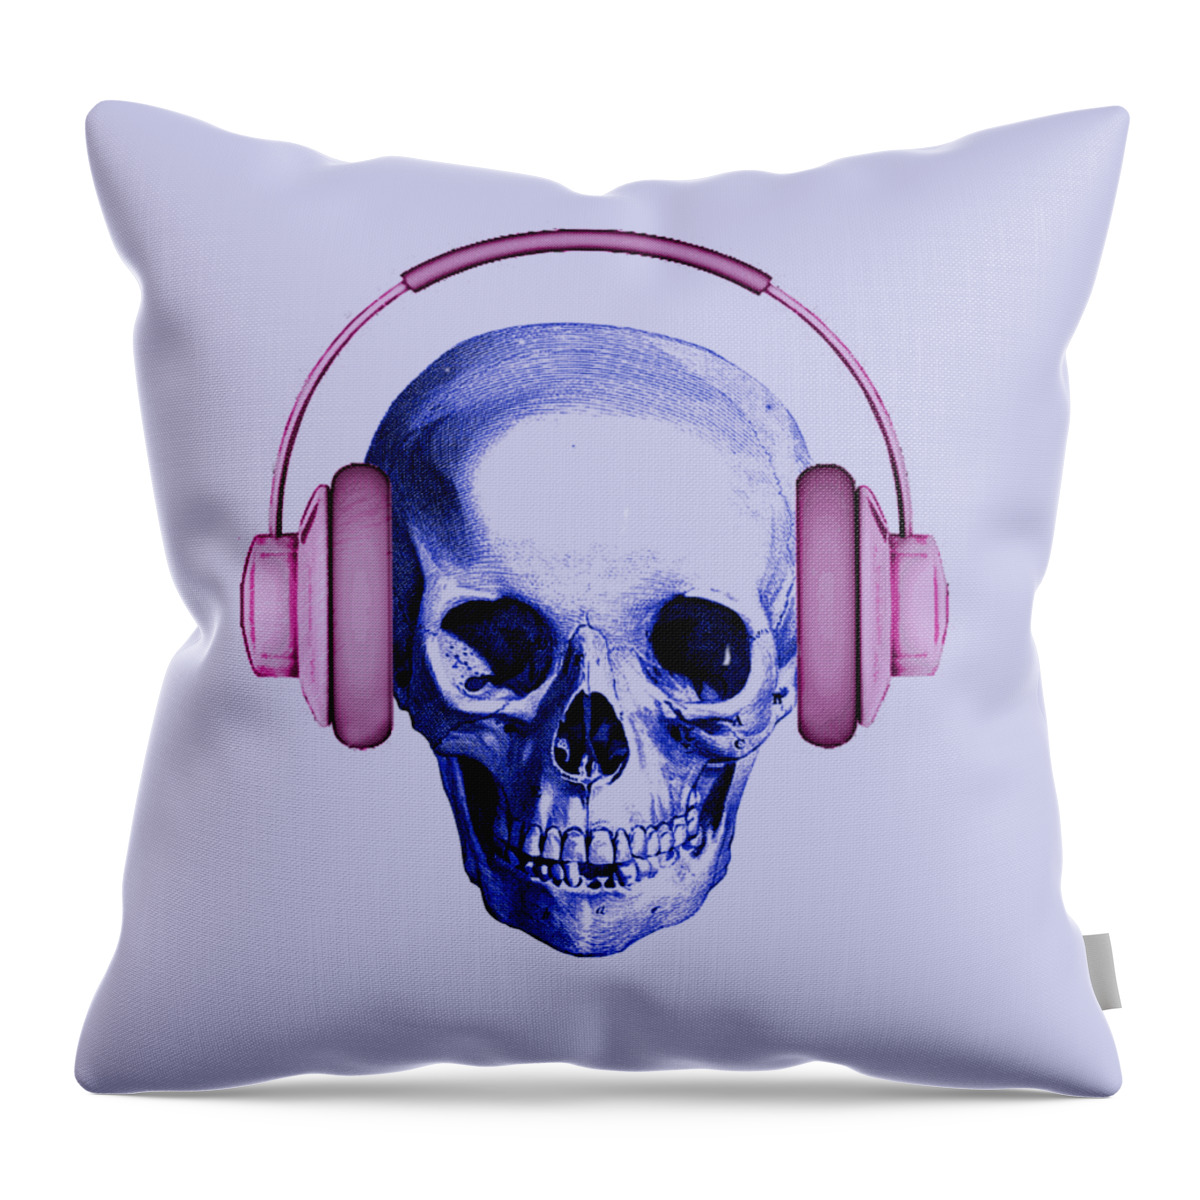 Skull Throw Pillow featuring the digital art Skull deejay by Madame Memento